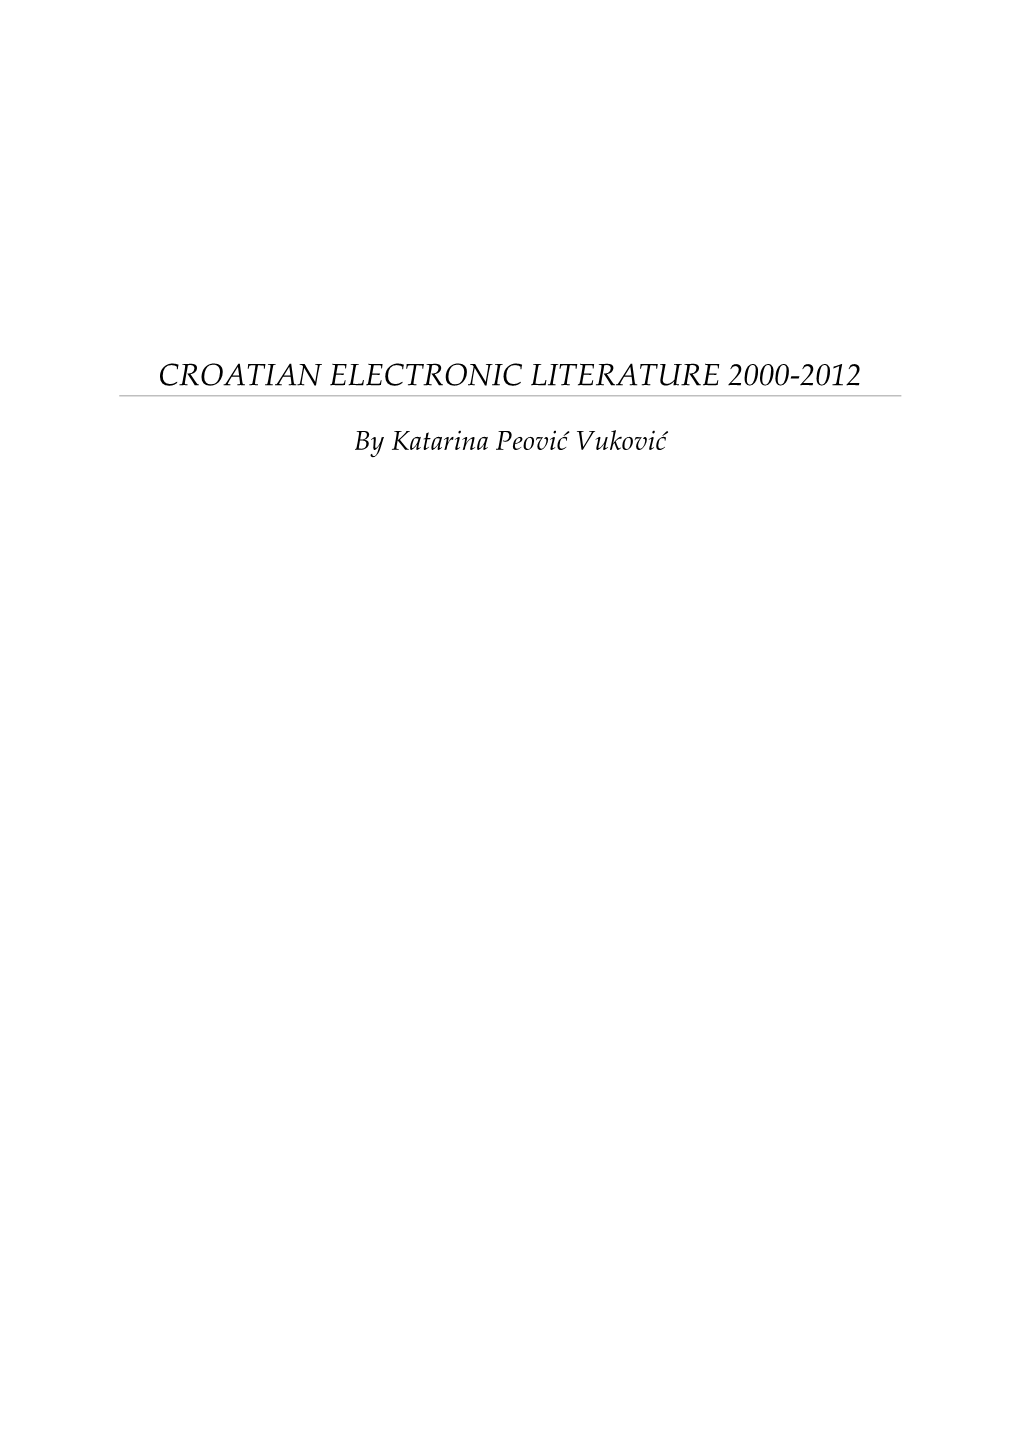 Croatian Electronic Literature 2000-2012